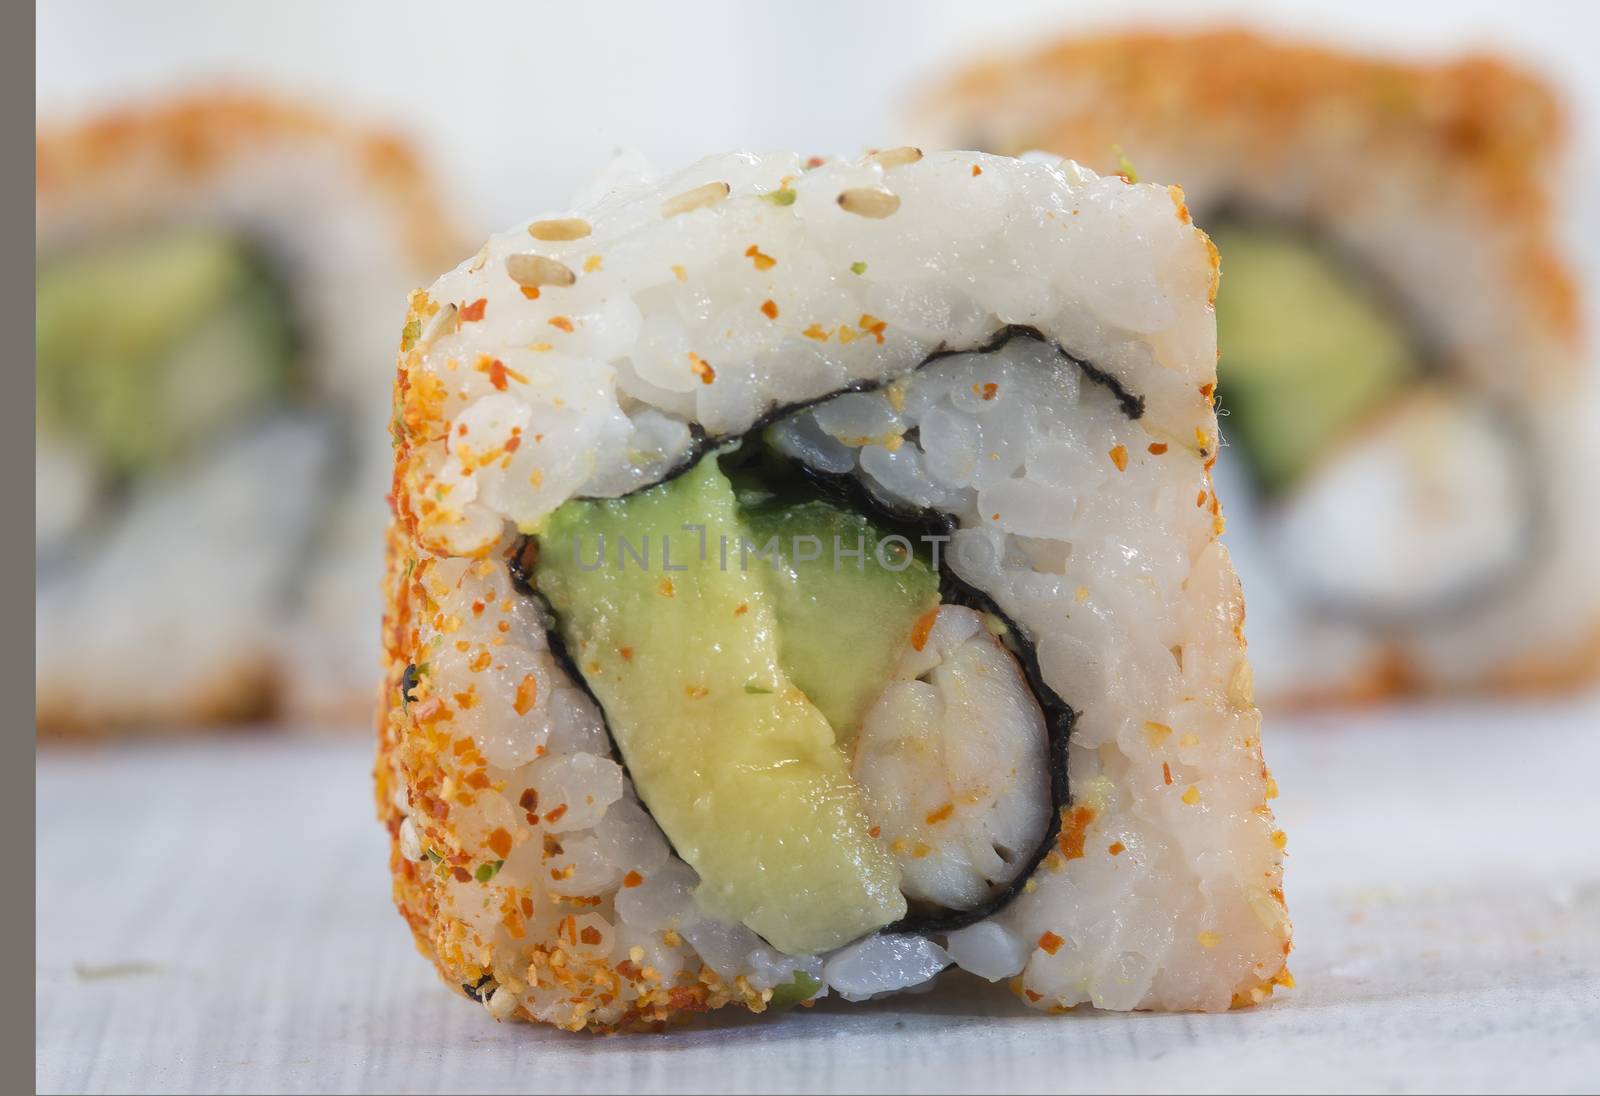 Californian sushi rolls by JPC-PROD